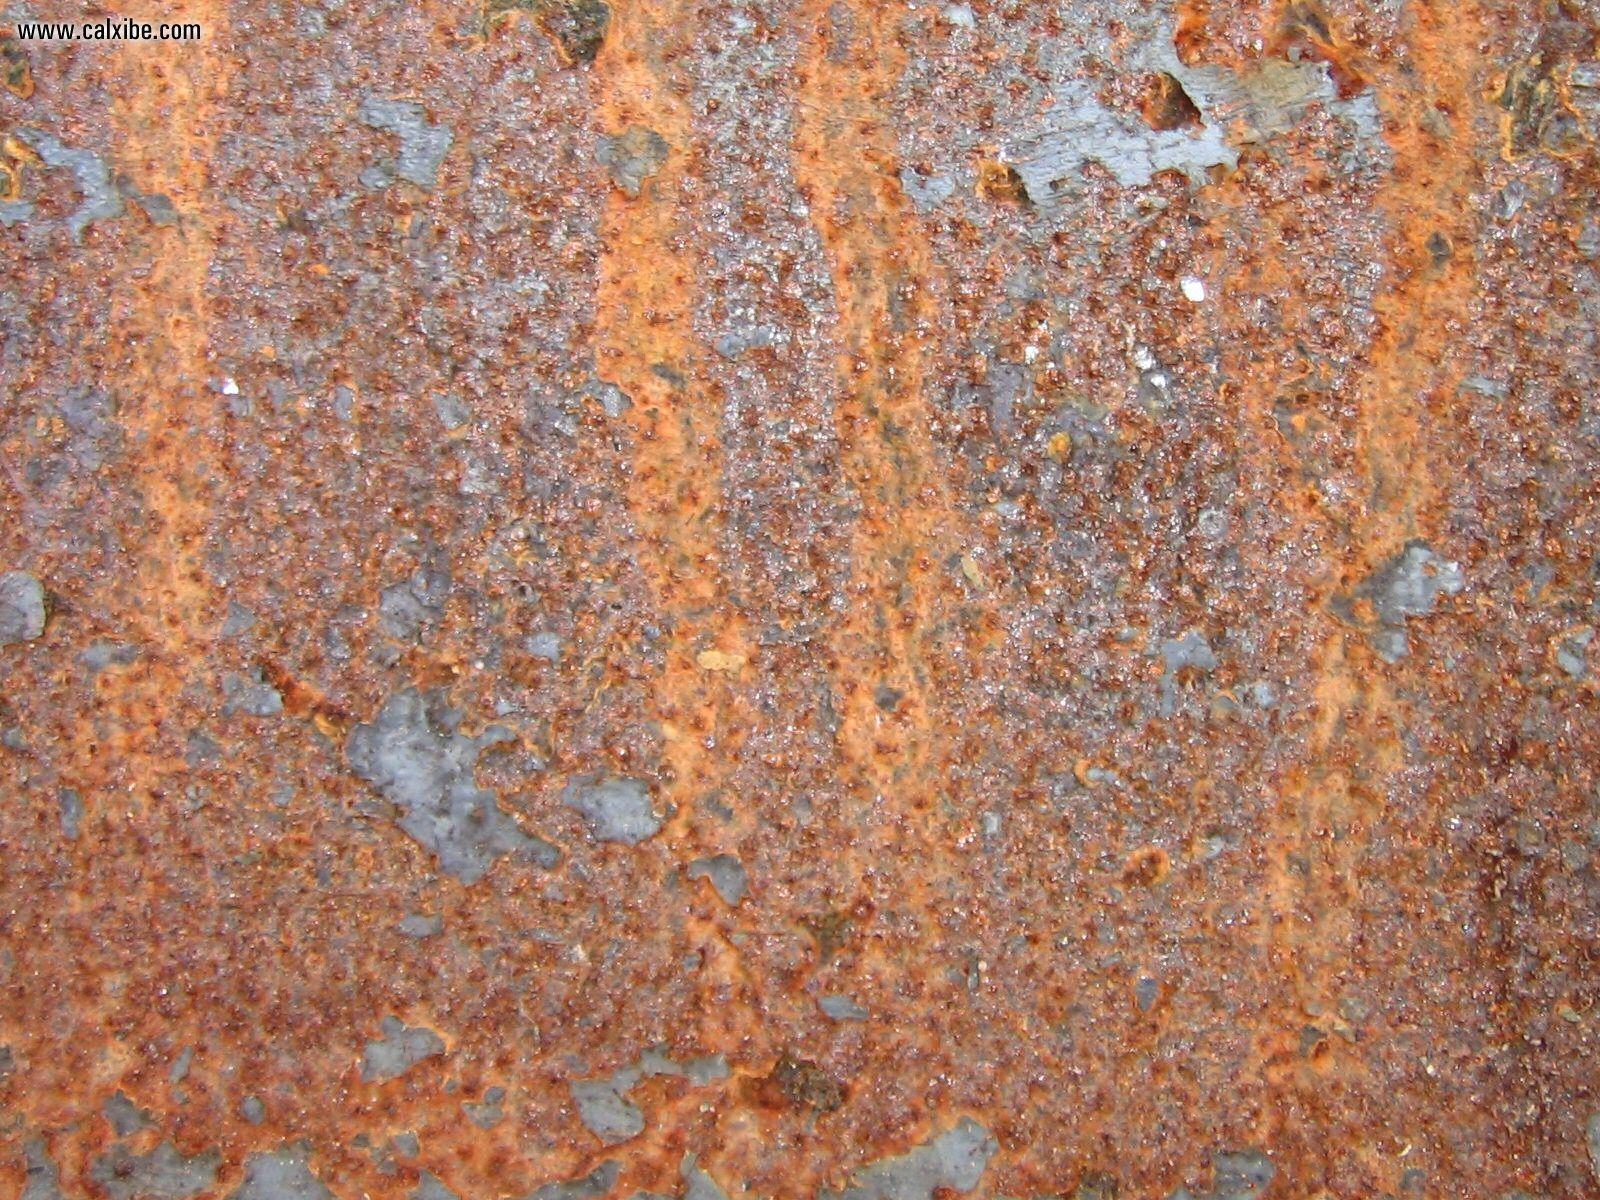 Development: Rusty Metal, picture nr. 15953